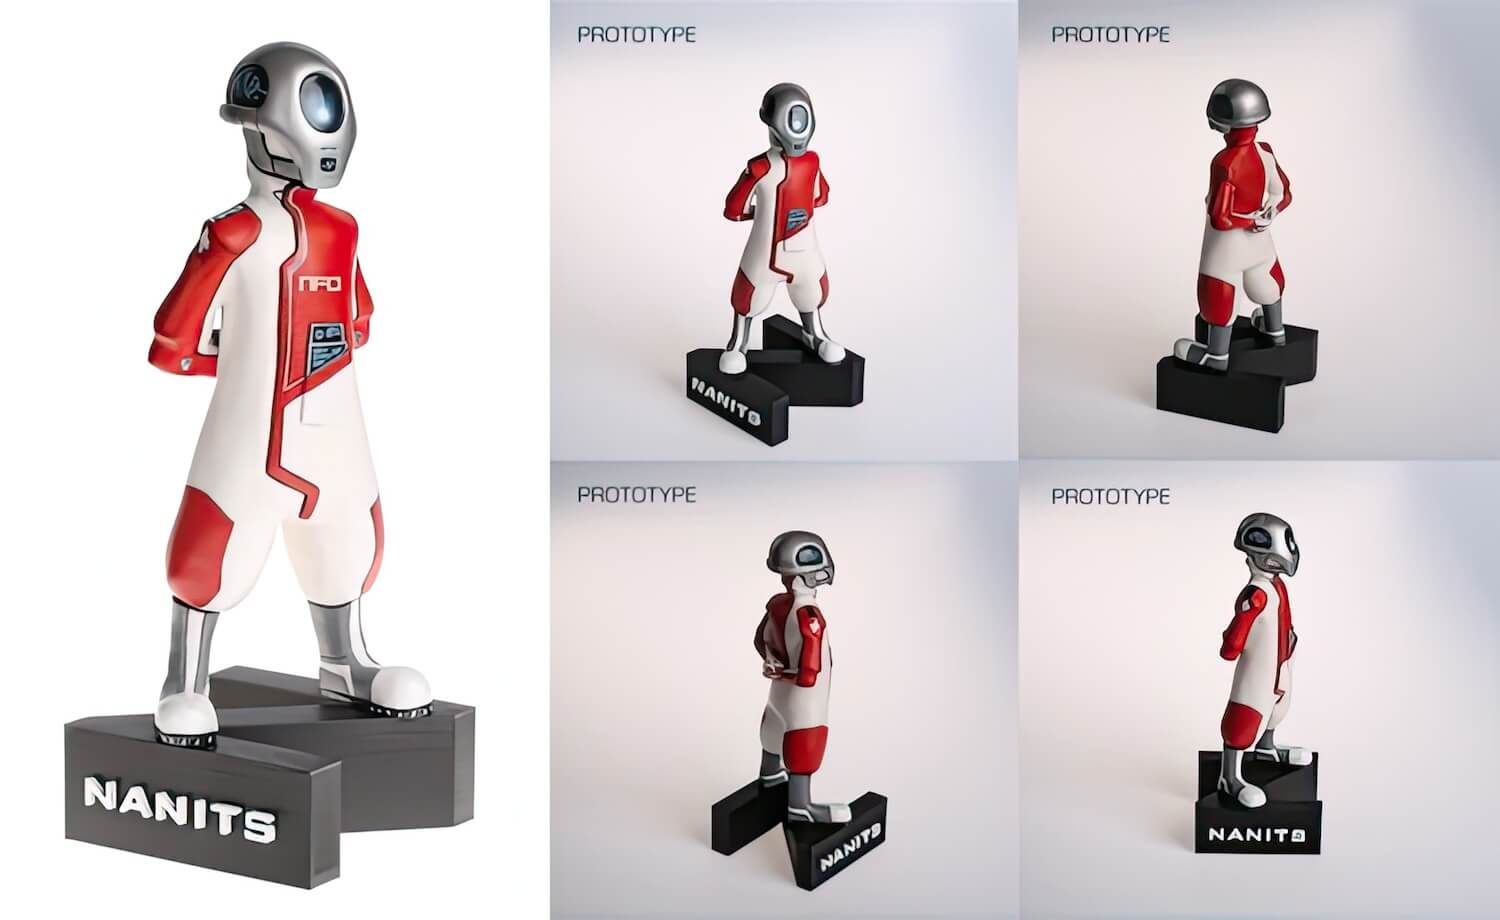 nanits maskot prototyp 3D character design artblock michael petrus | Michael Petrus